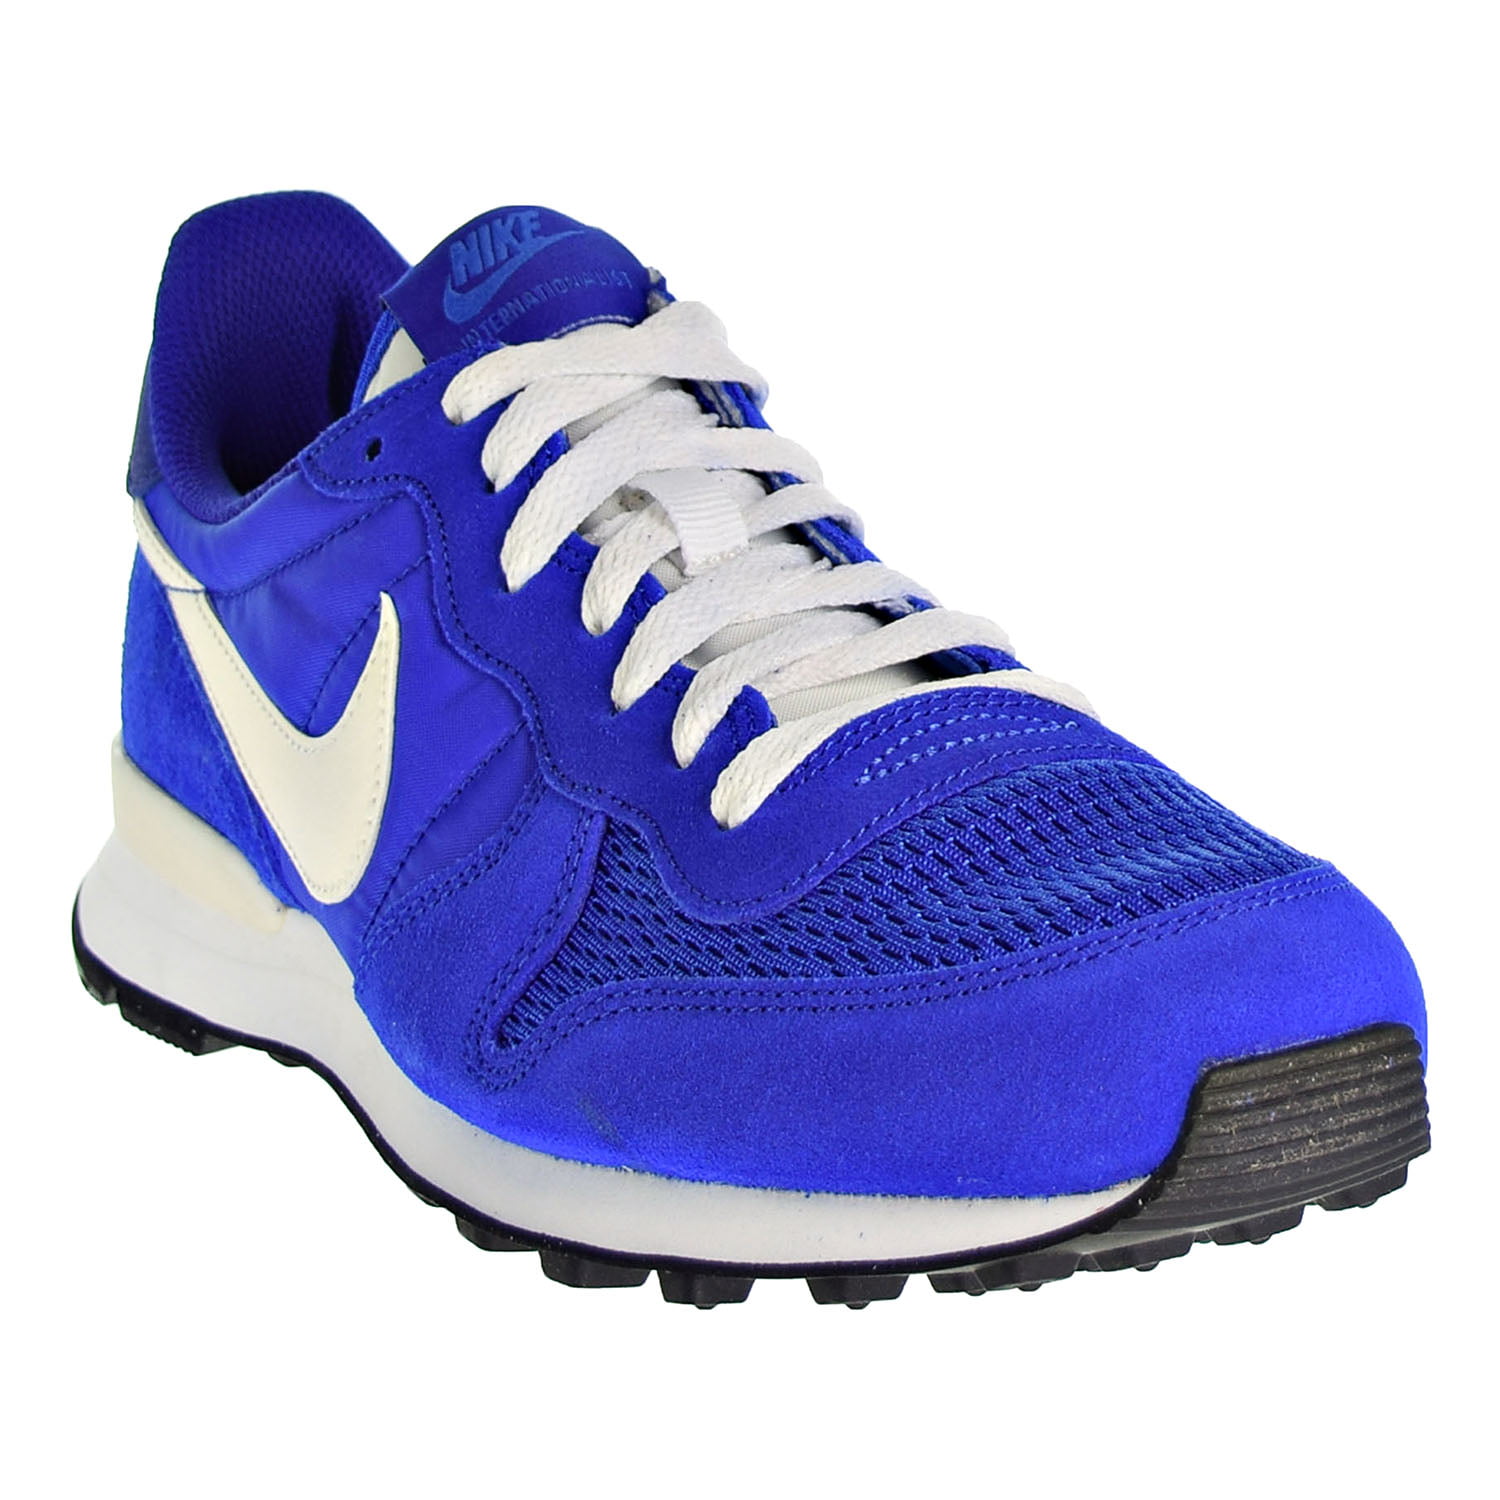 meer aangenaam Eerste Nike Internationalist Men's Shoes Racer Blue/Sail/Sail 828041-411 -  Walmart.com